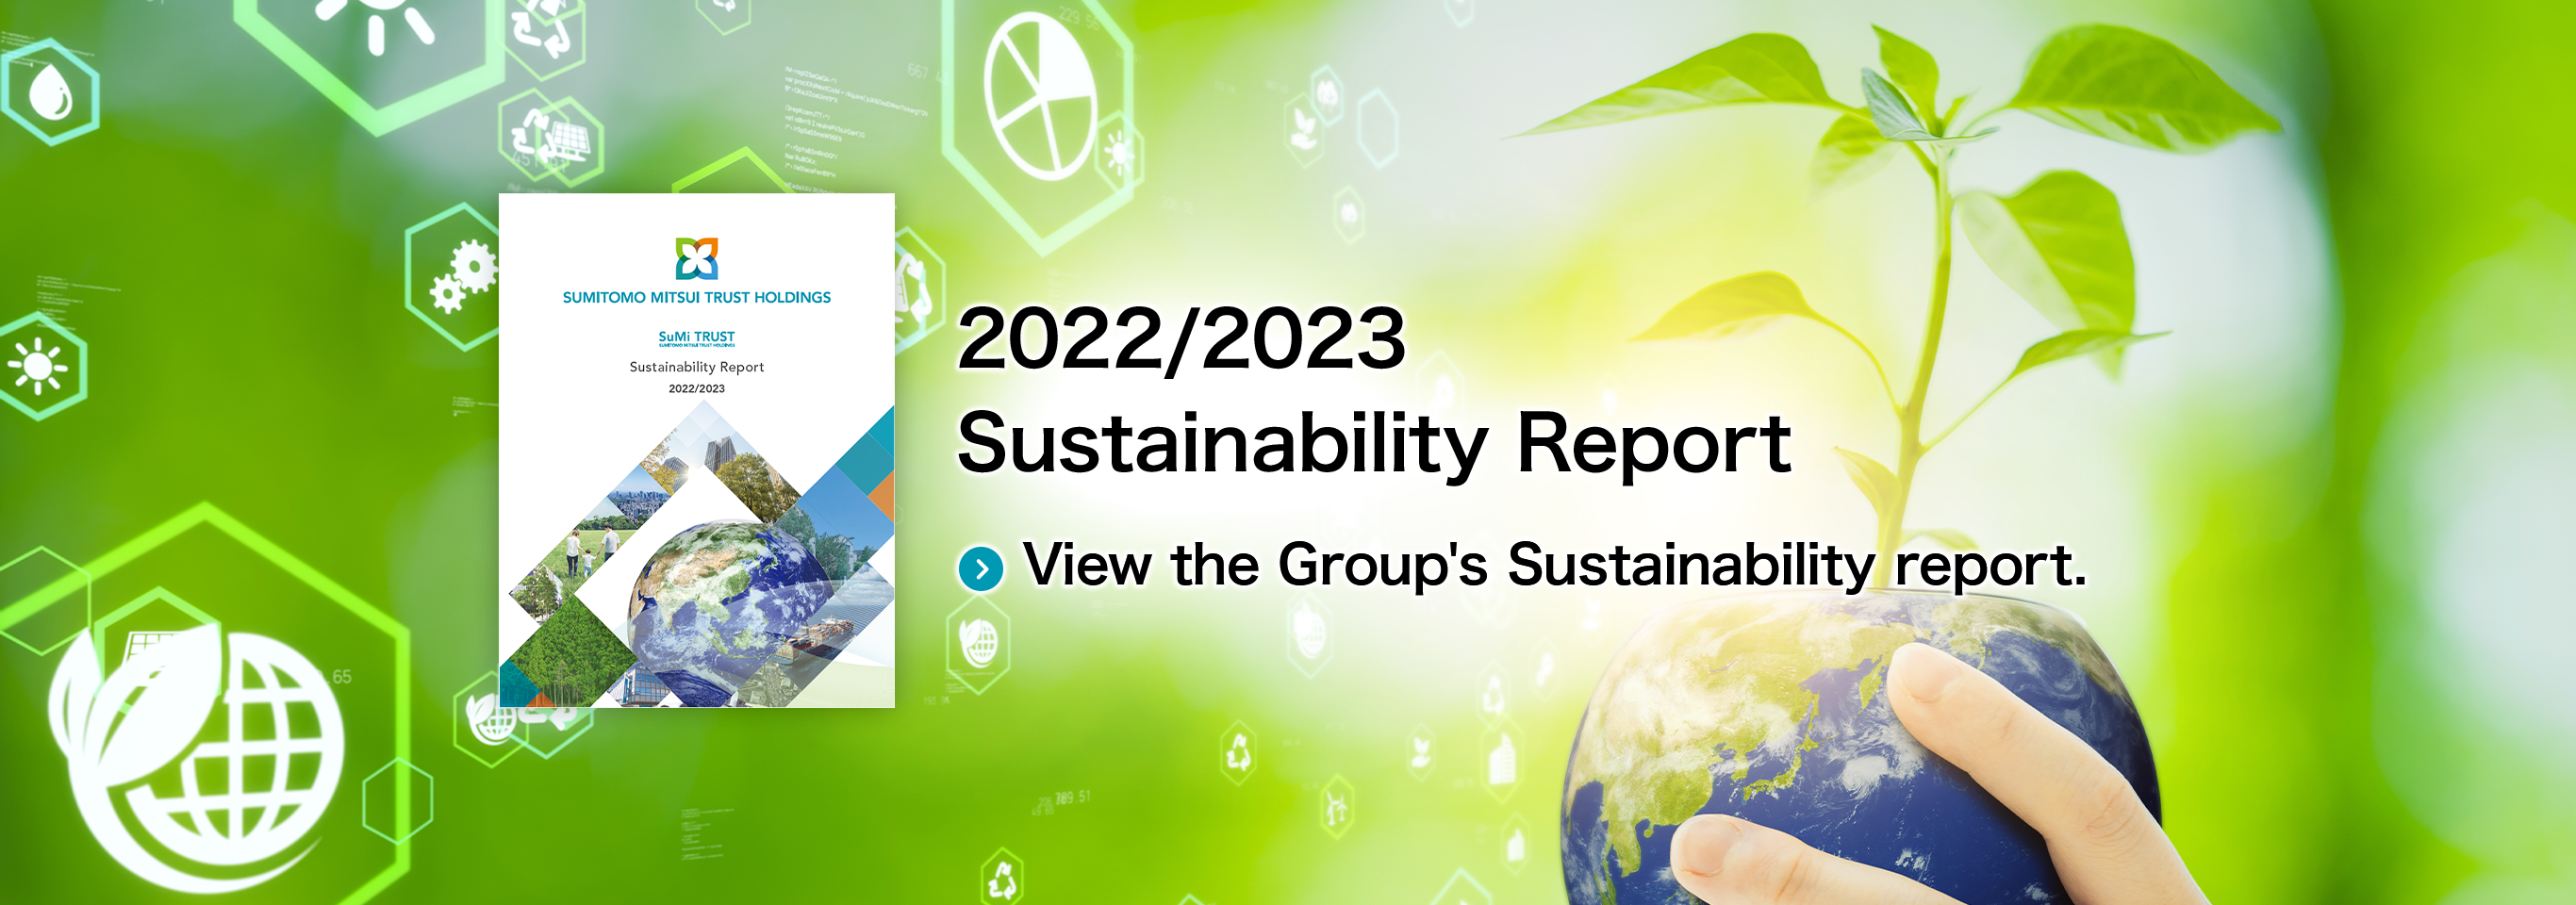 2020/2021 Sustainability Report Sustainability Report